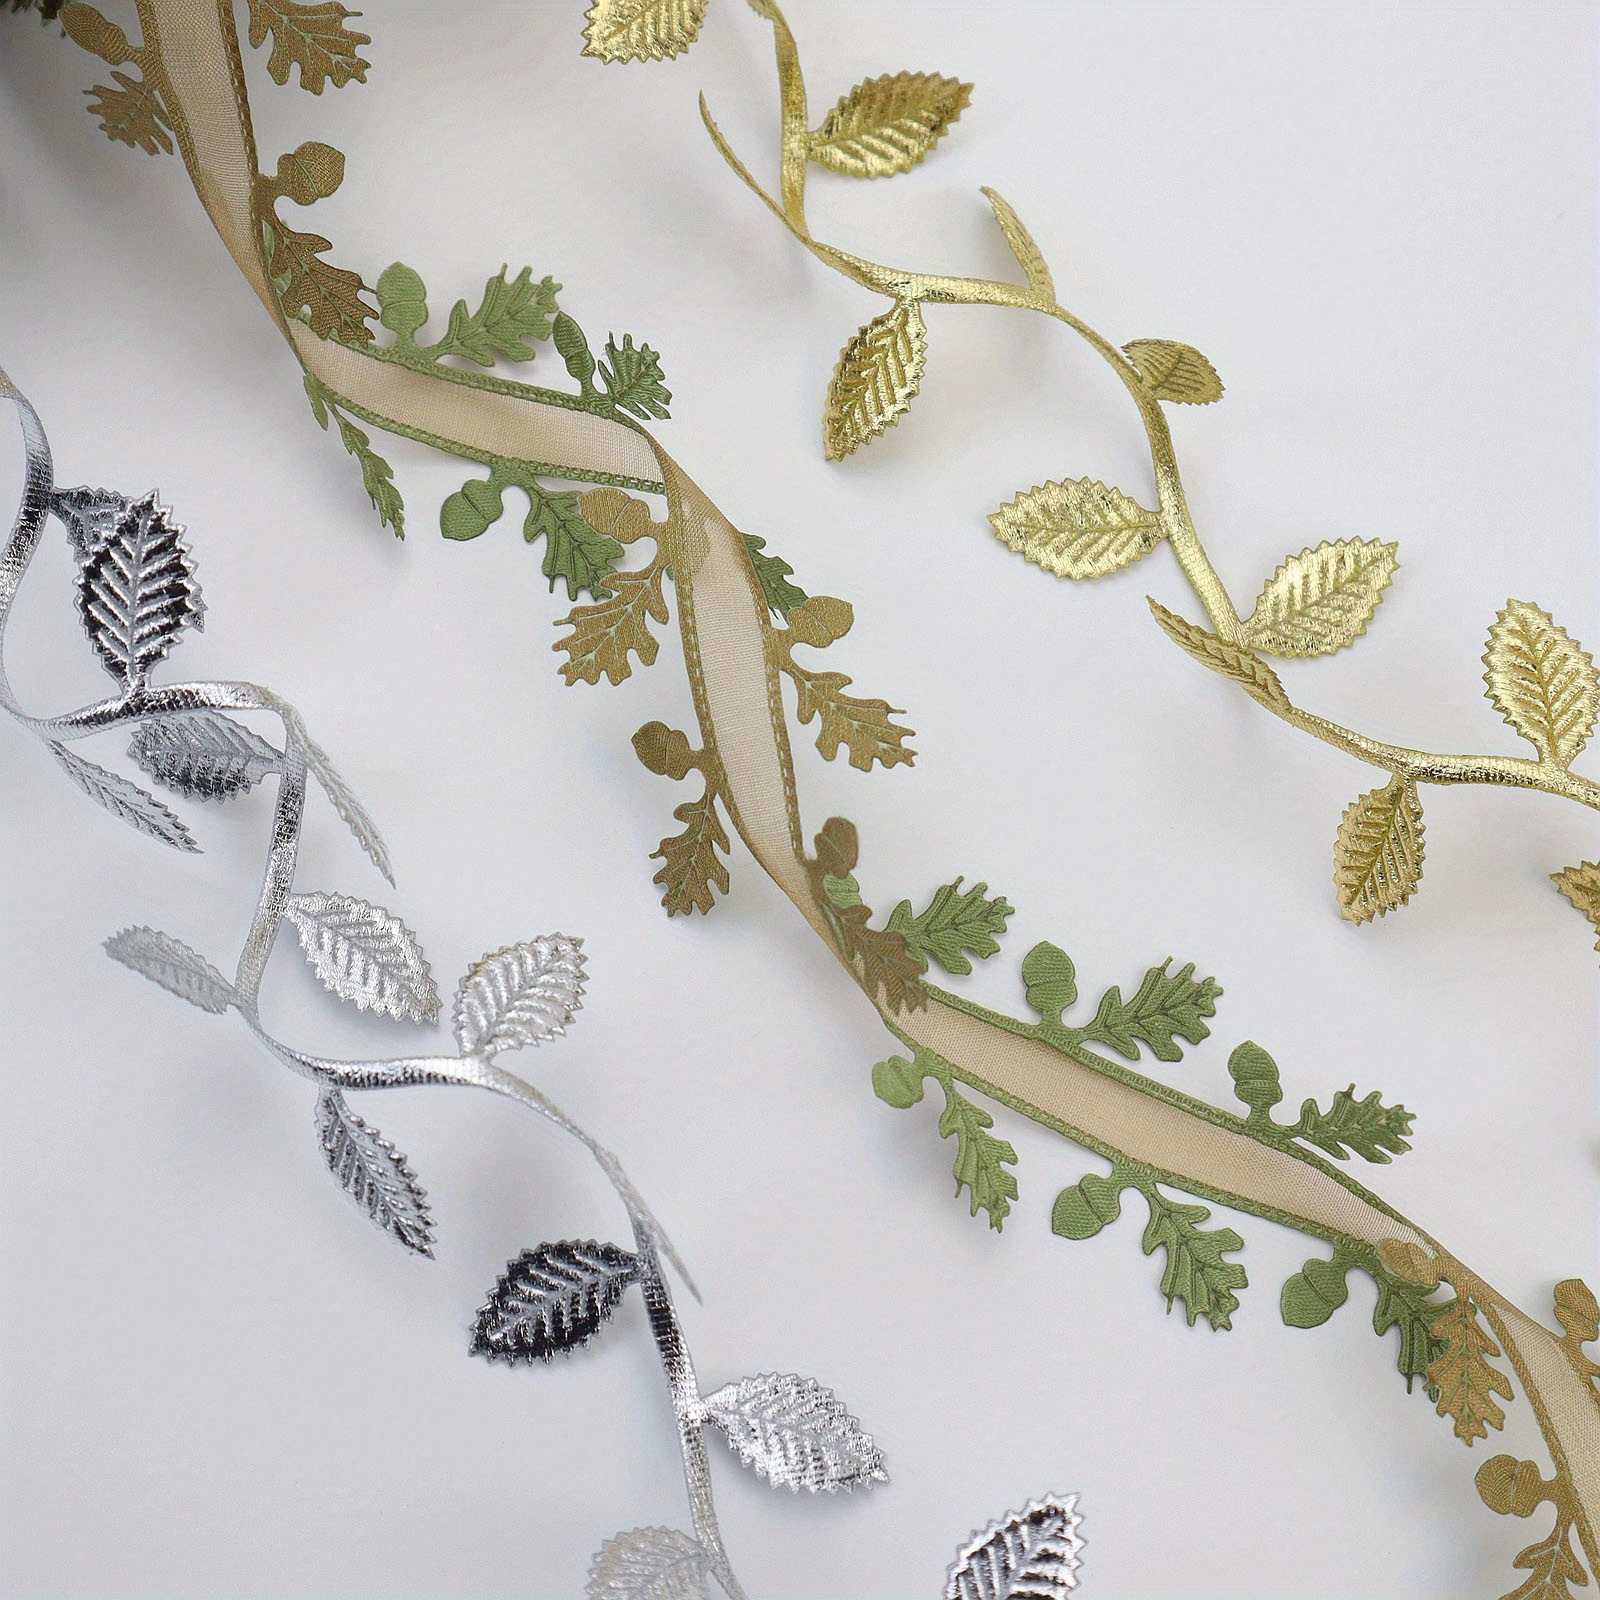 Olive Green Leaves Leaf Trim Ribbon -20 Yards - for DIY Craft Party Wedding Home Decoration (Olive Green)